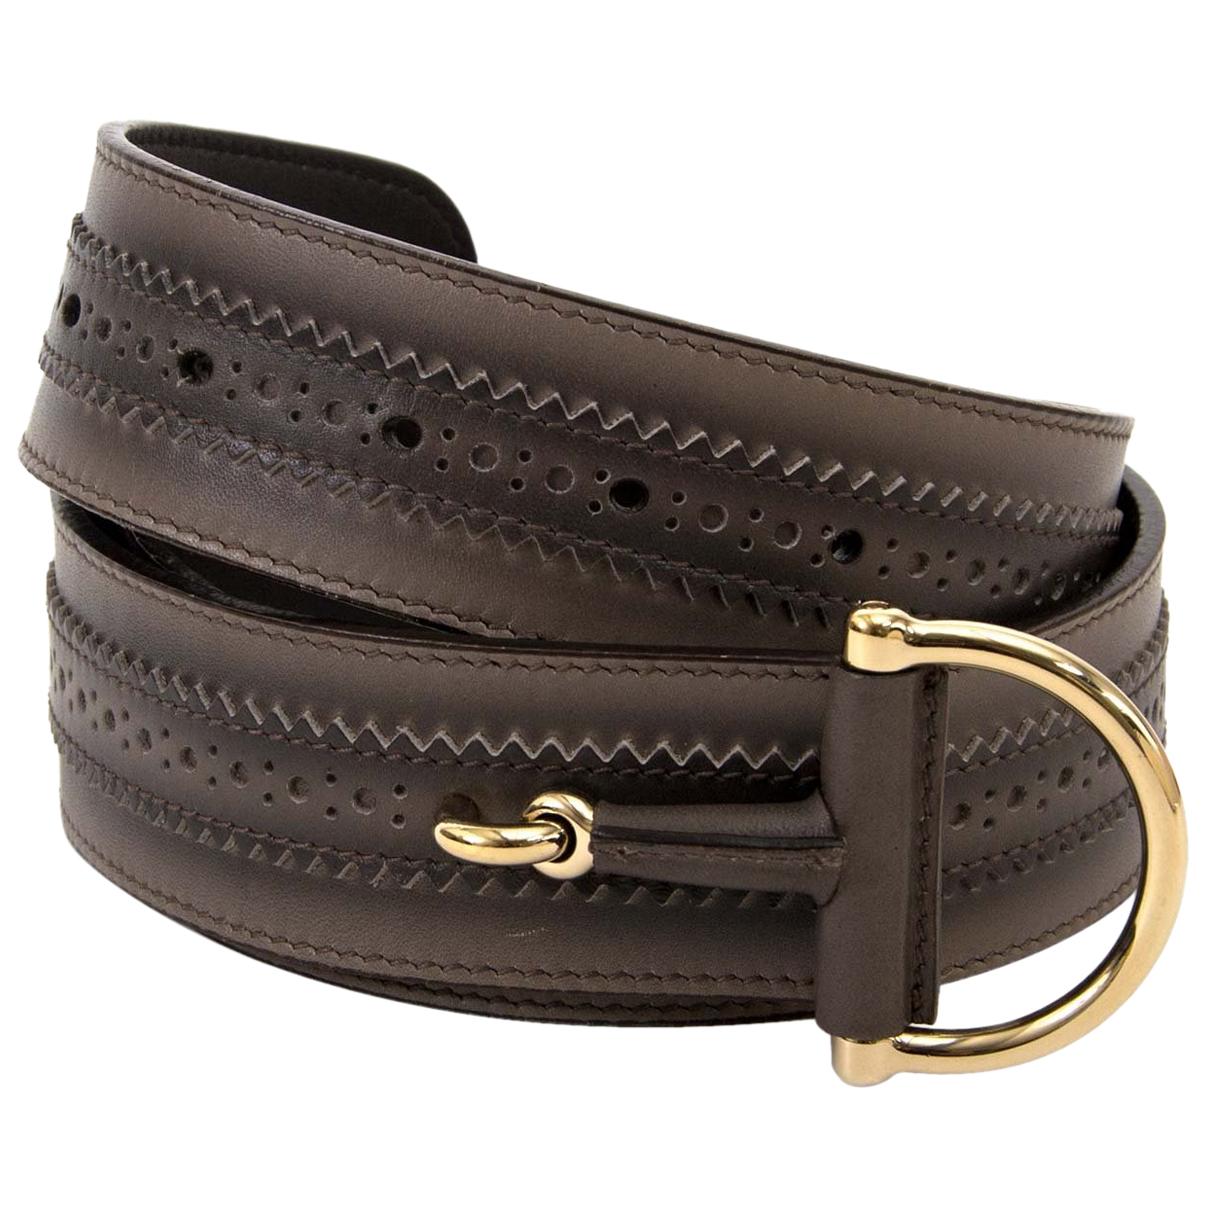 Gucci Grey Leather Horsebit Belt - Size 85